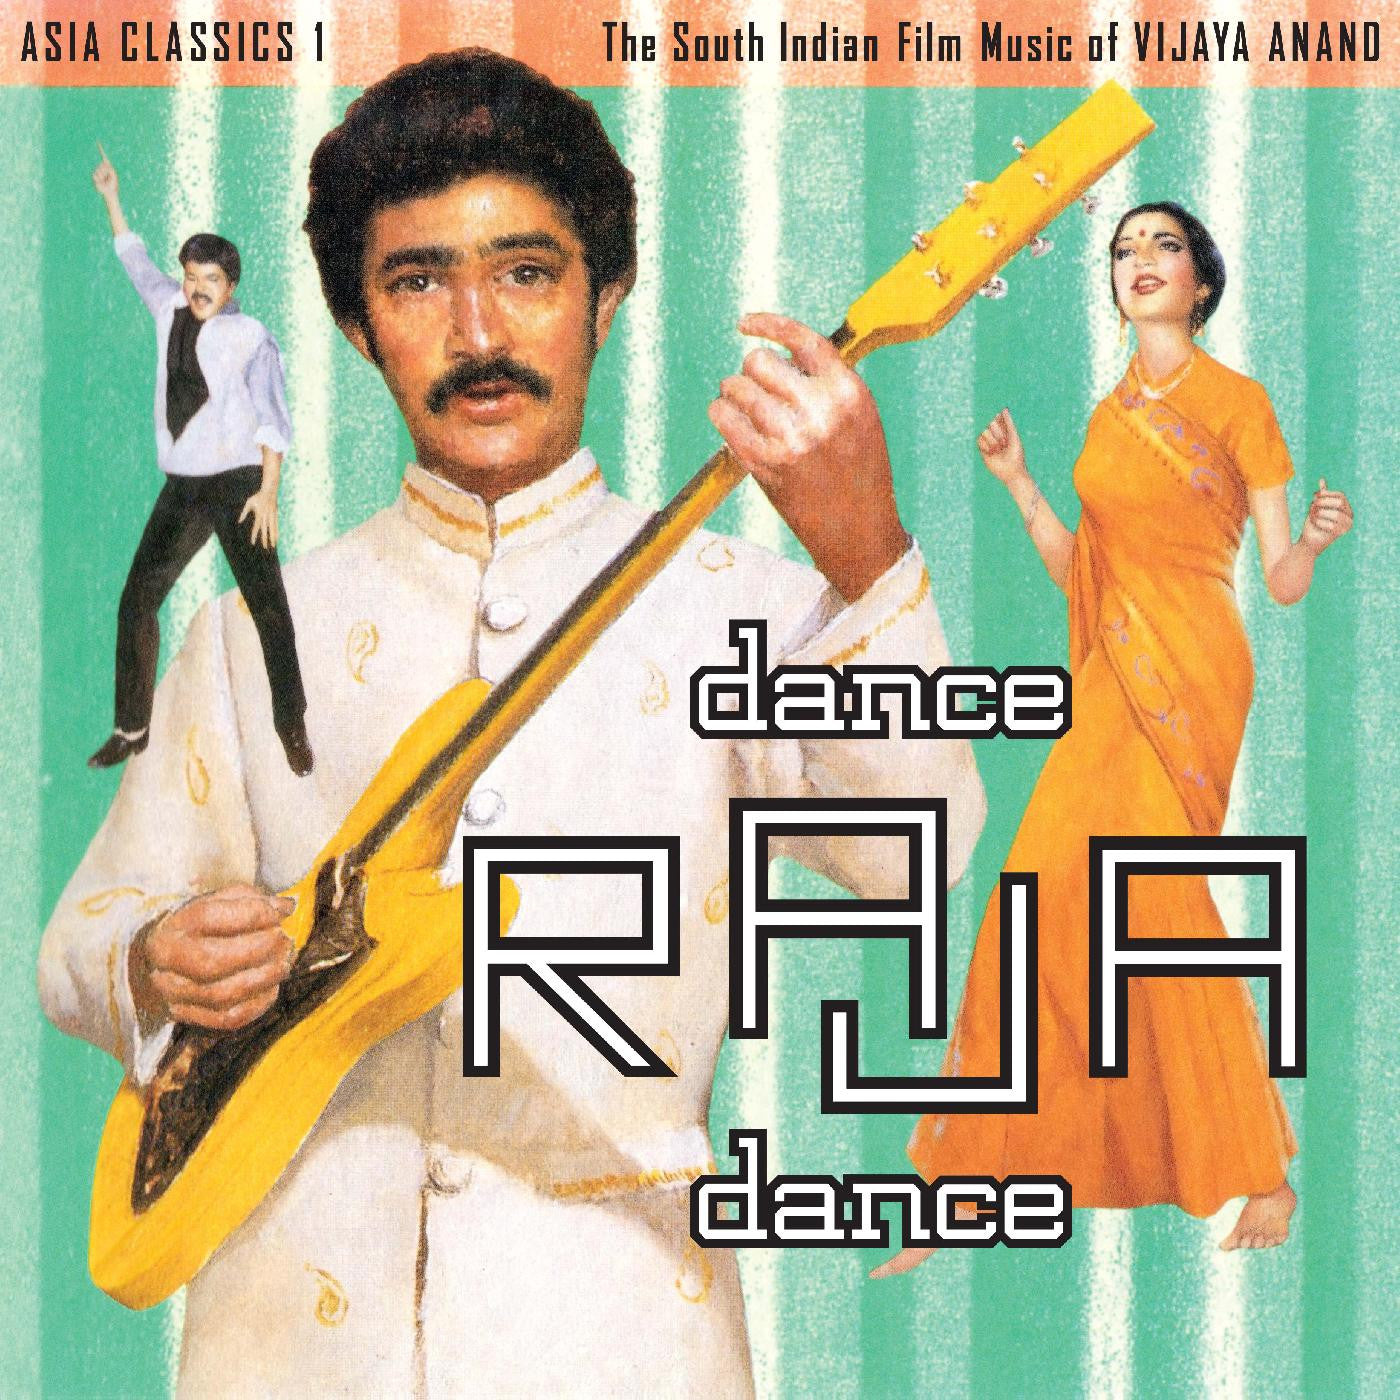 Vijaya Anand - Asia Classics 1: The South Indian Film Music of Vijaya Anand / Dance Raja Dance LP